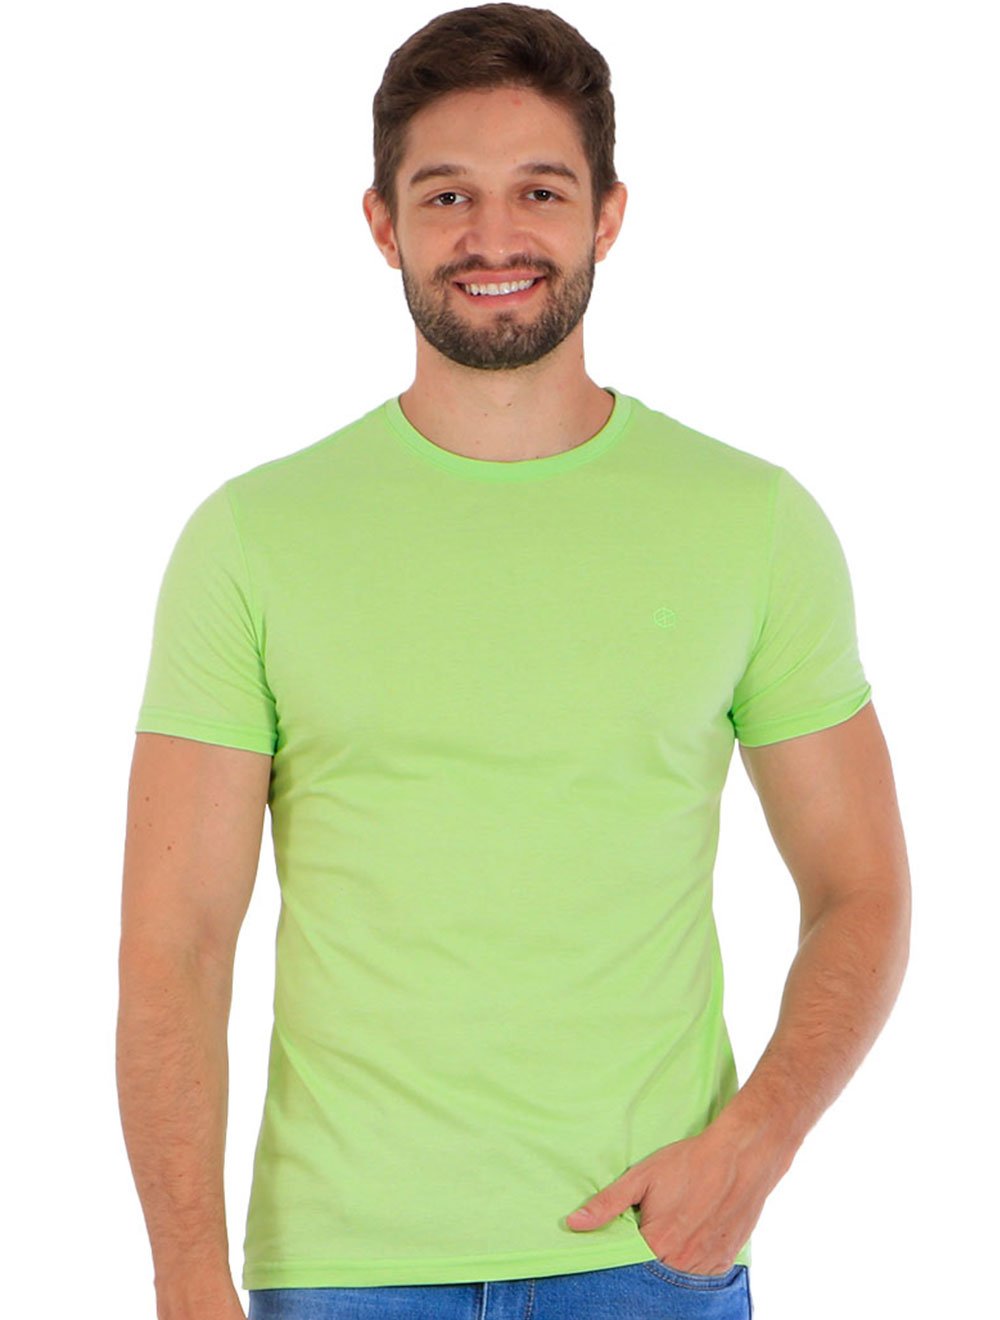 Camiseta Disky Masculina Essential Chá Verde Claro